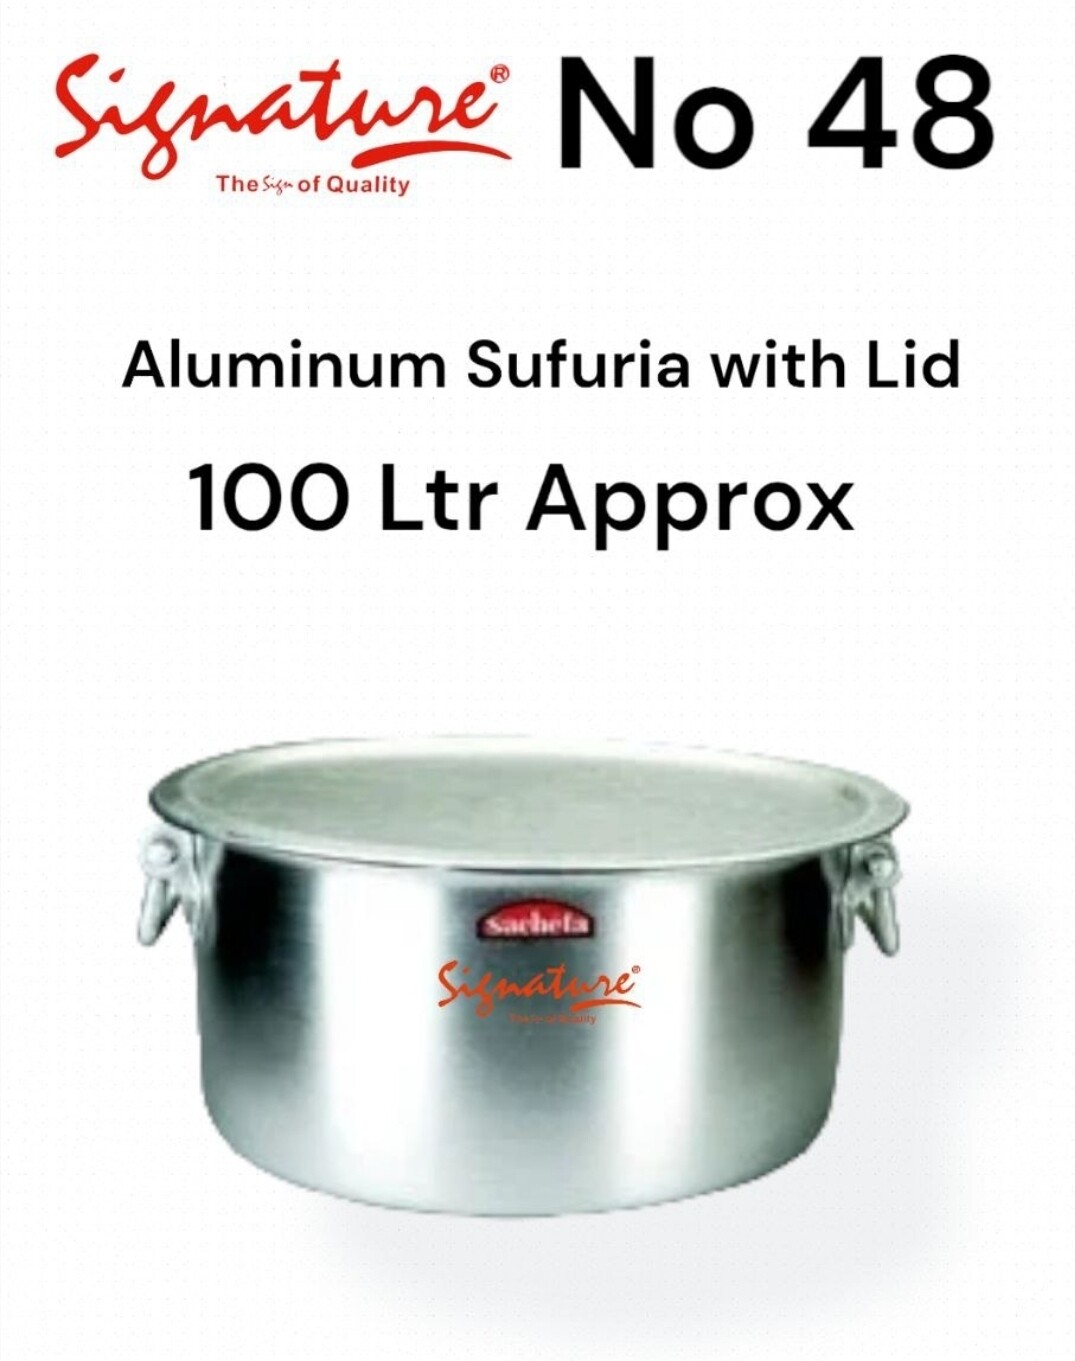 Signature heavy duty aluminium sufuria with lid 100litres